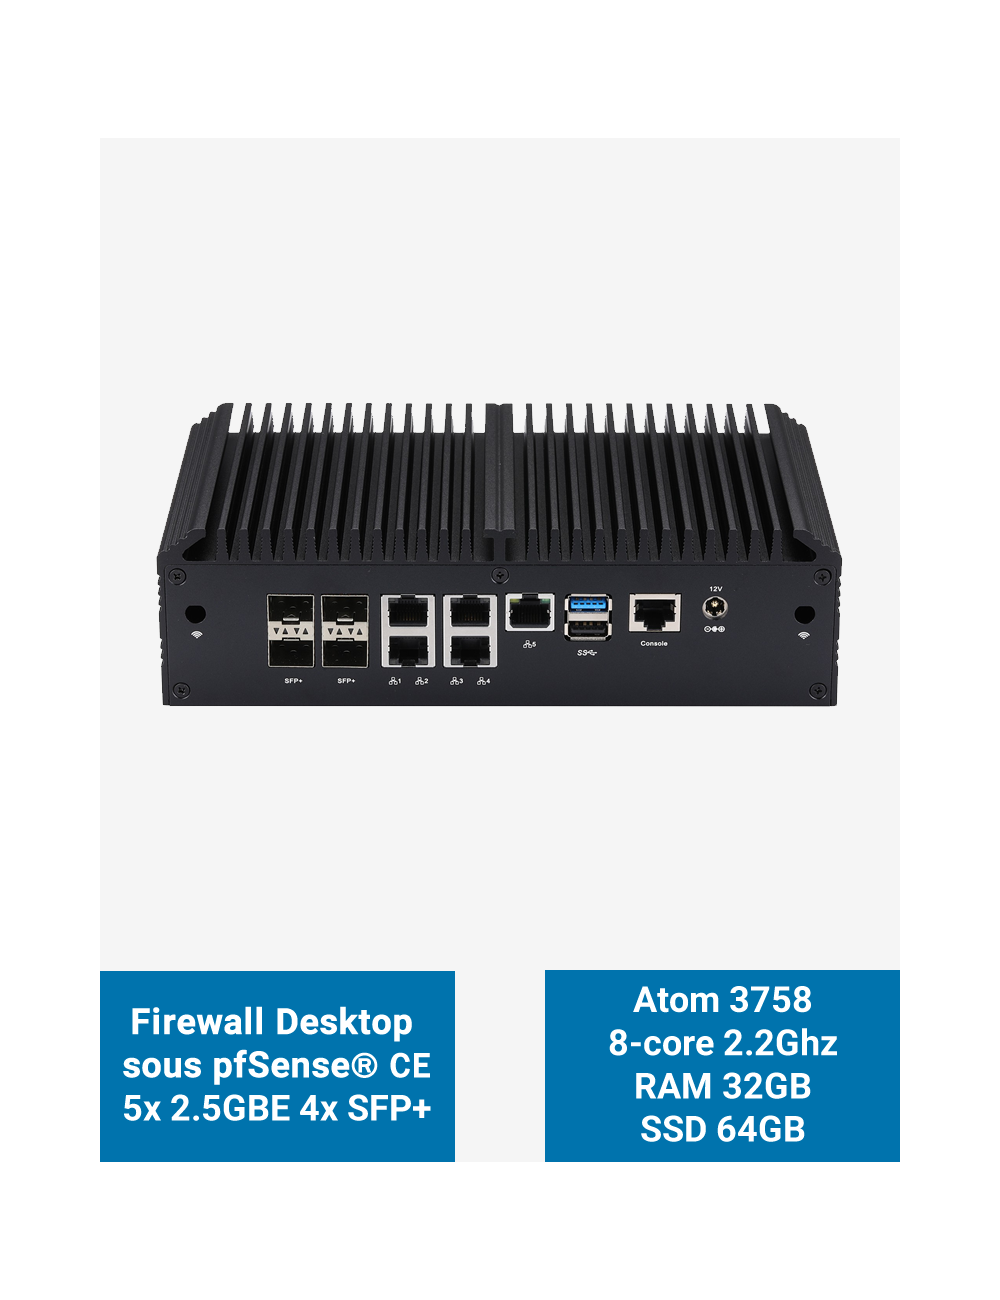 Firewall pfSense Q2x Celeron C3758 5x2.5G 4xSFP+ 32GB SSD 64GB